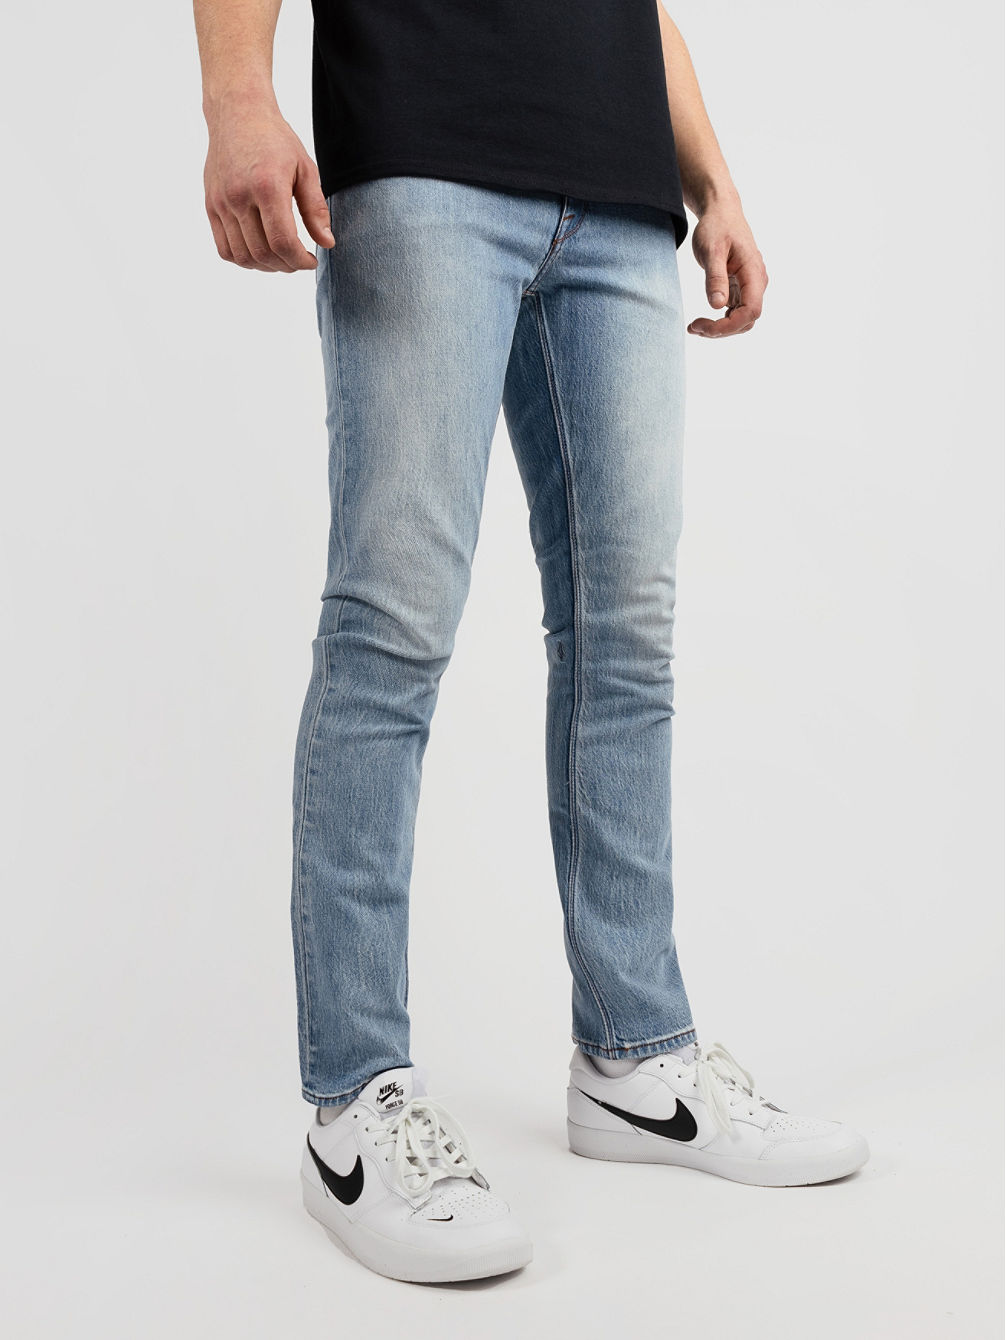 Vorta Jeans